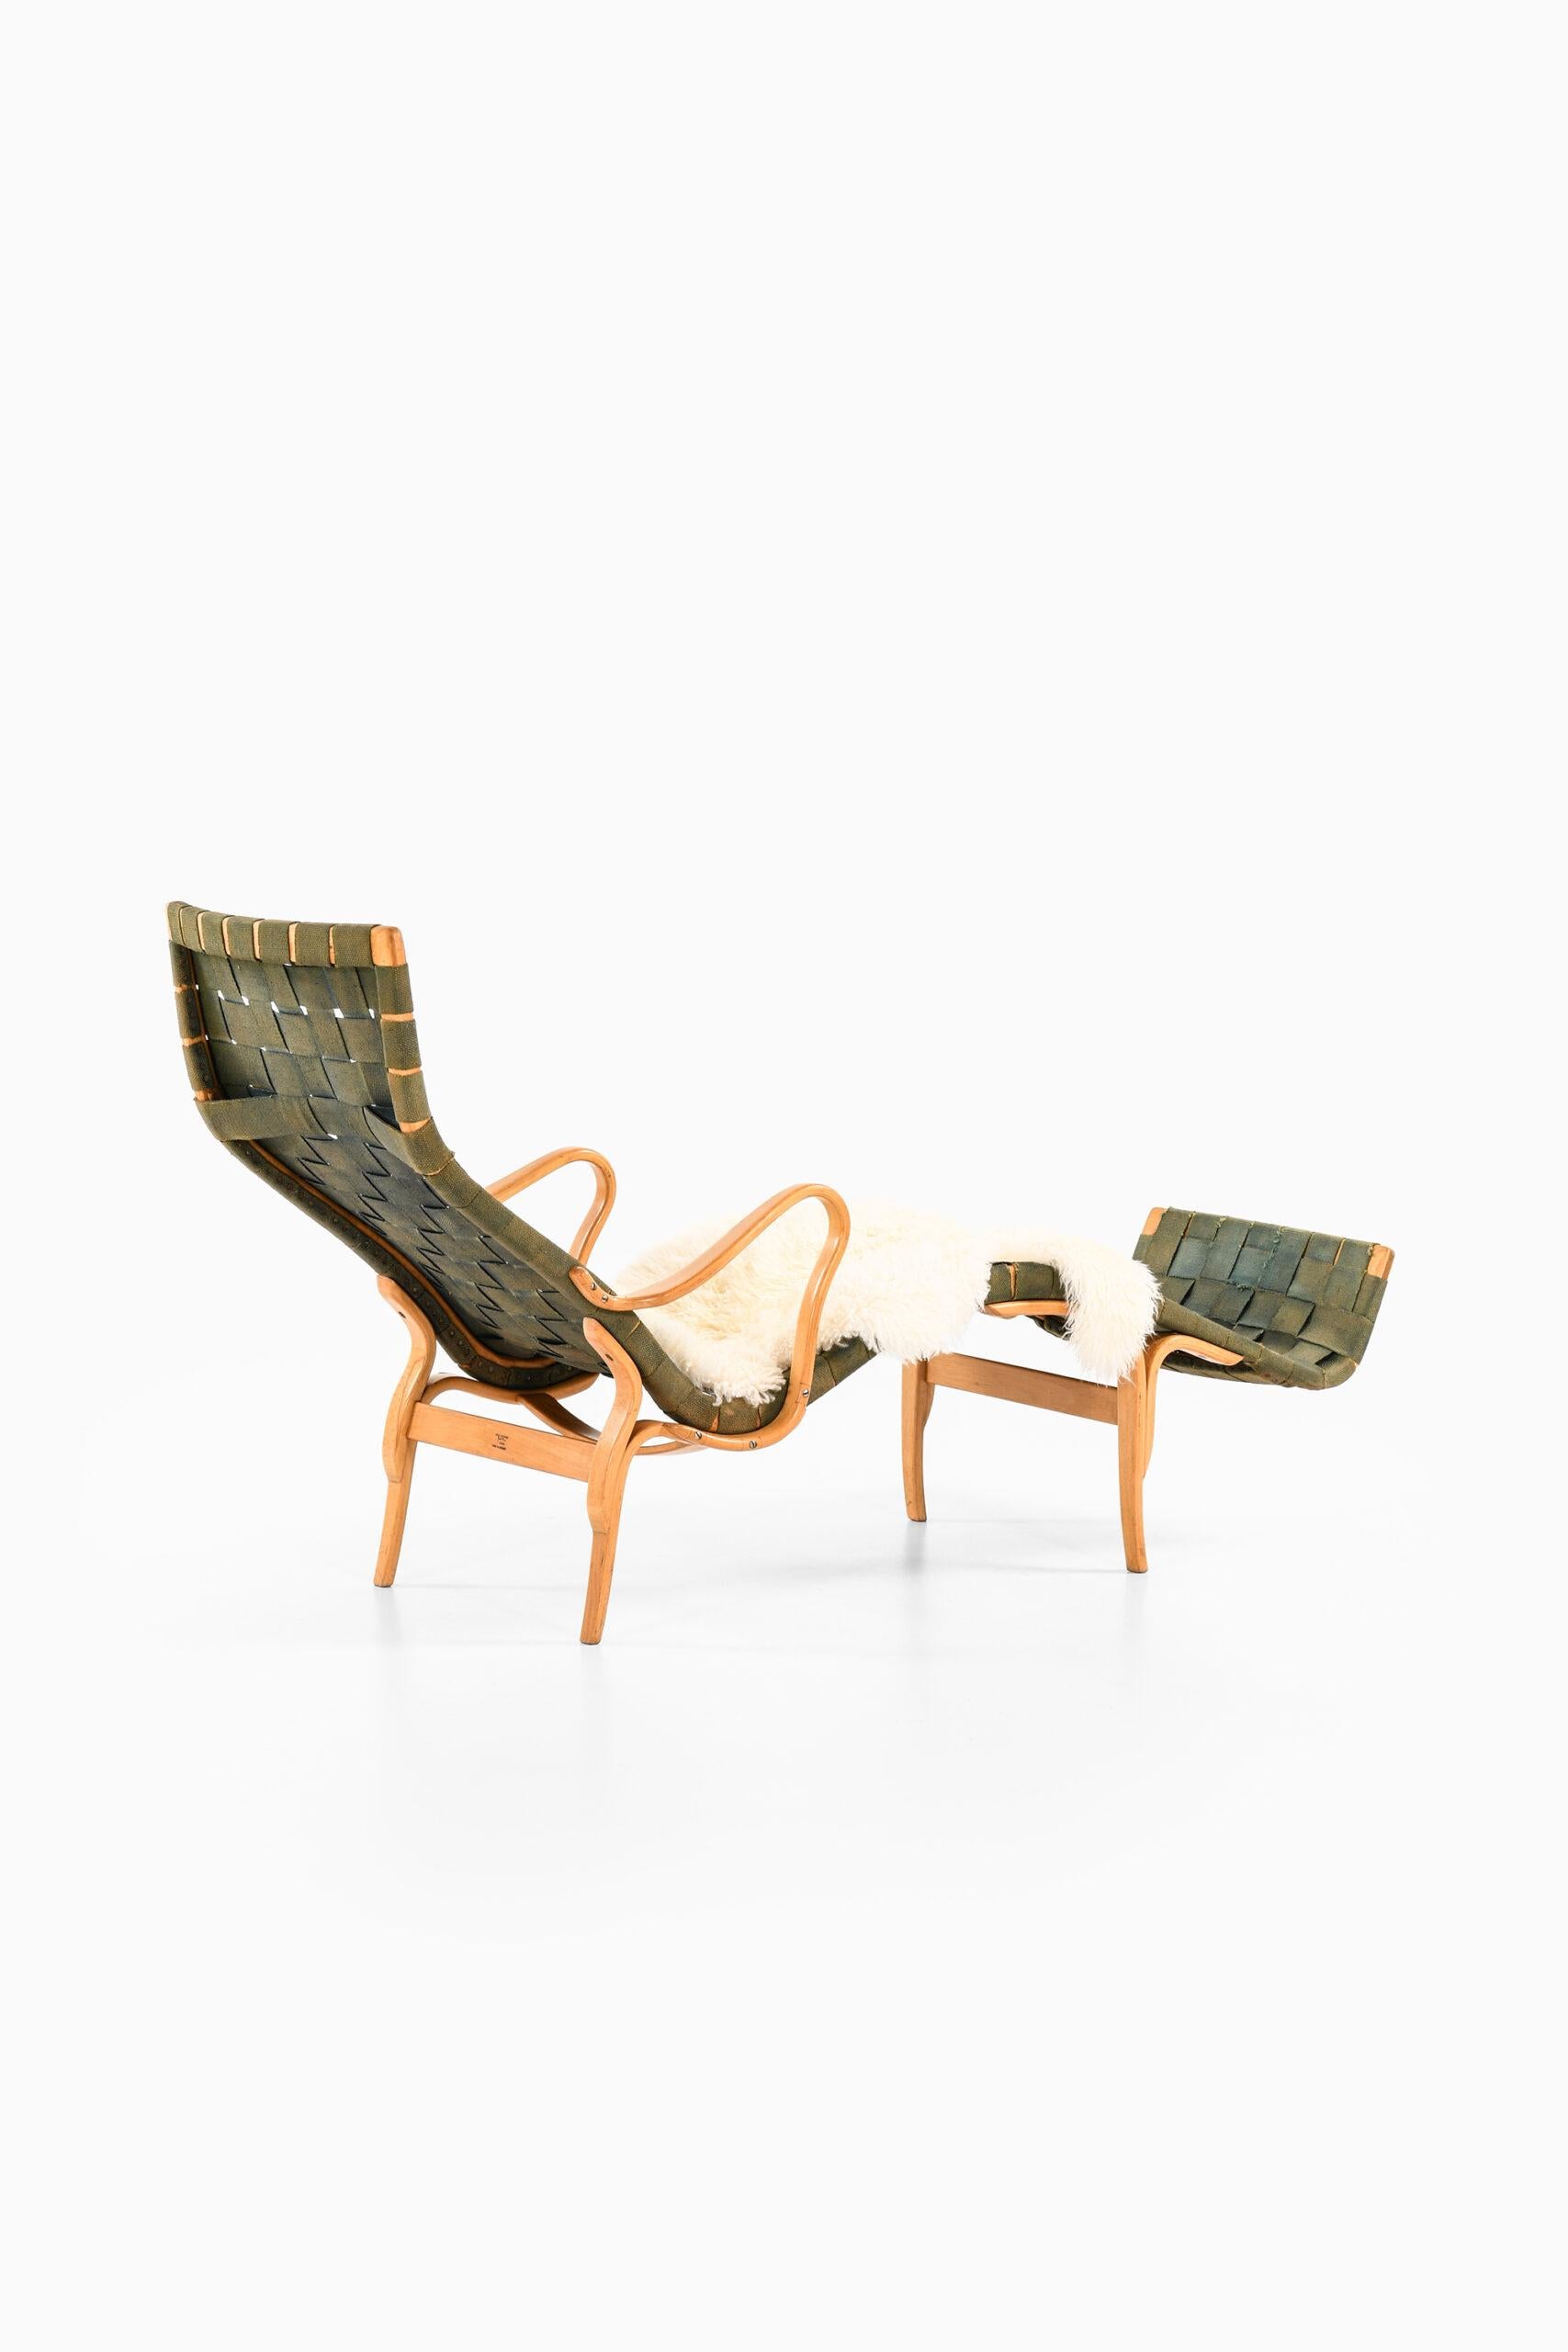 Scandinavian Modern Bruno Mathsson Lounge Chair Model Pernilla 3 / T-108 by Karl Mathsson in Värnamo